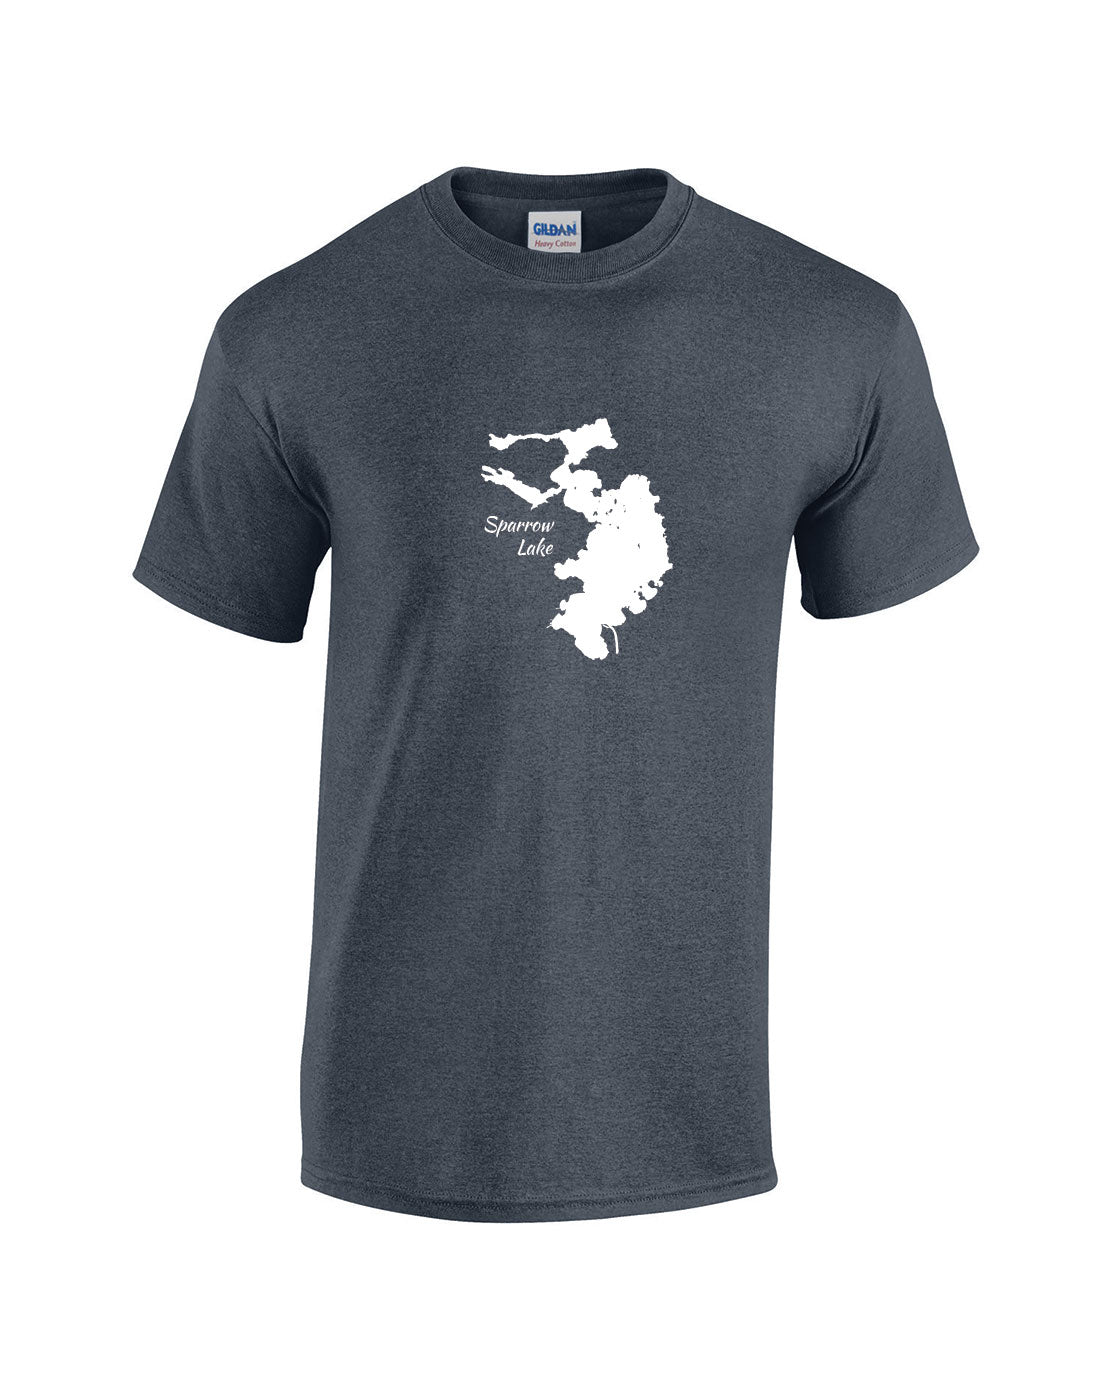 Sparrow Lake T-Shirt